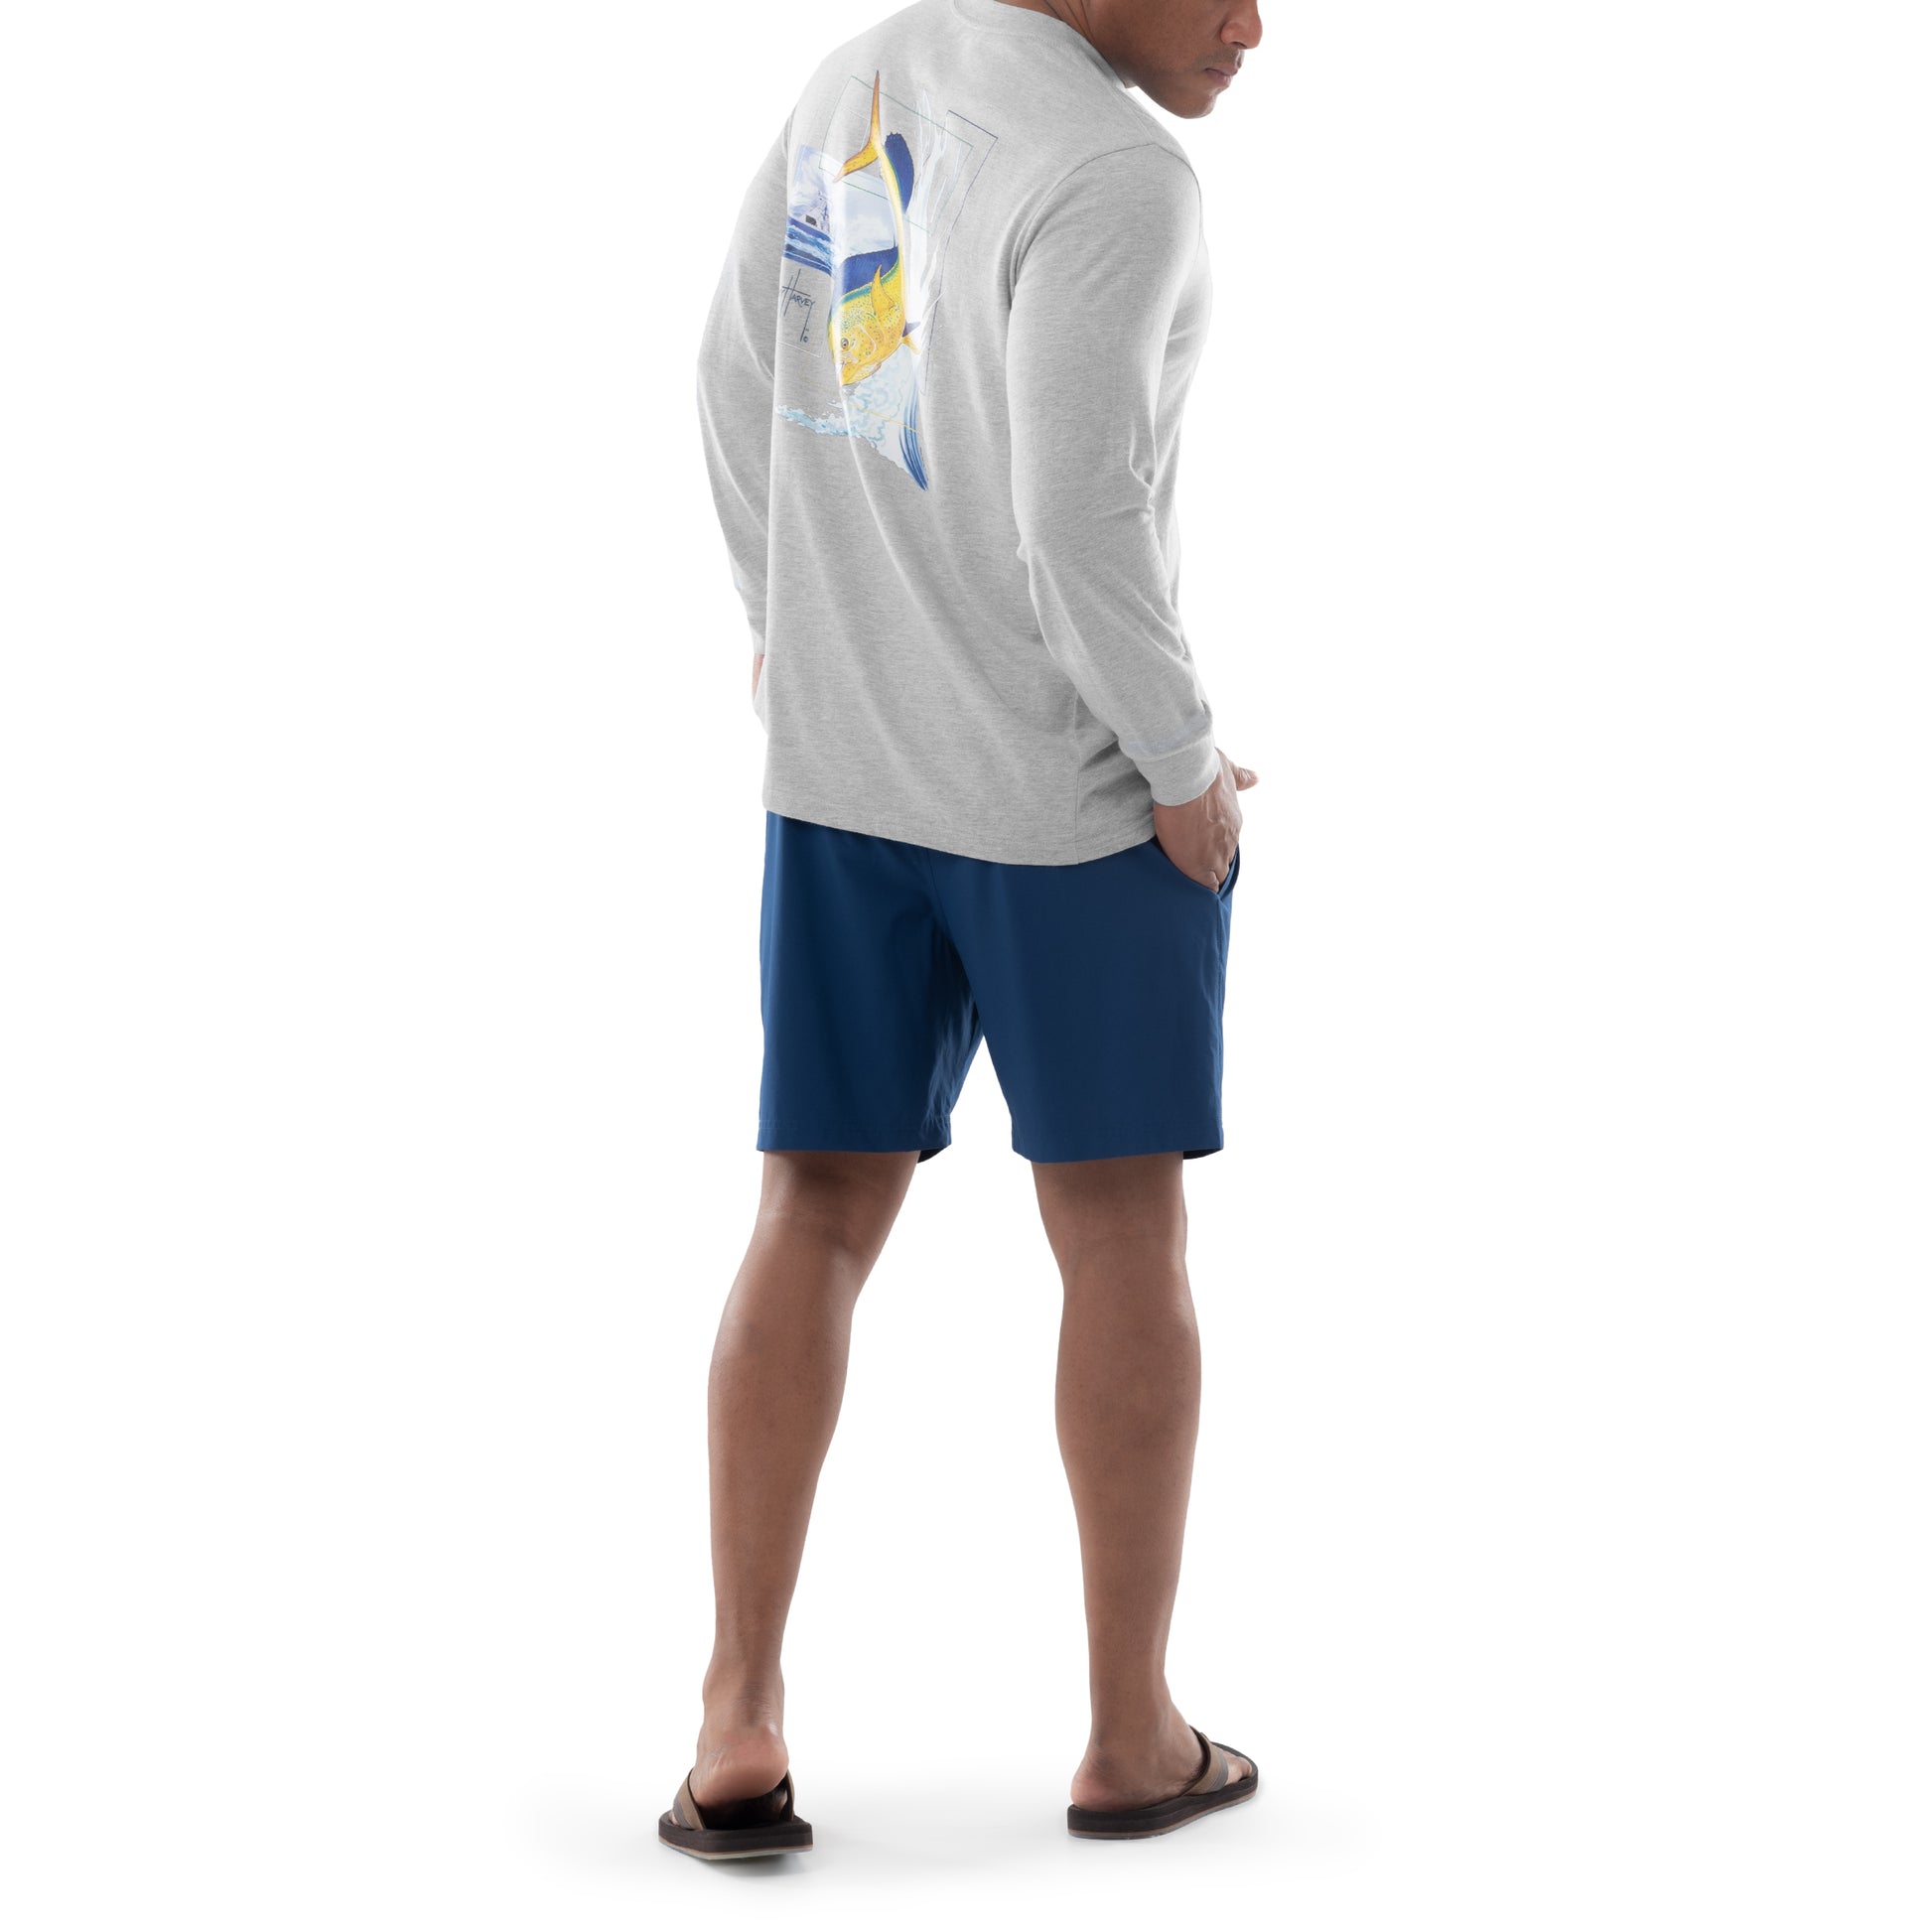 Pilot Pocket Shirt  Pocket shirt, Long sleeve shirts, Shirt size